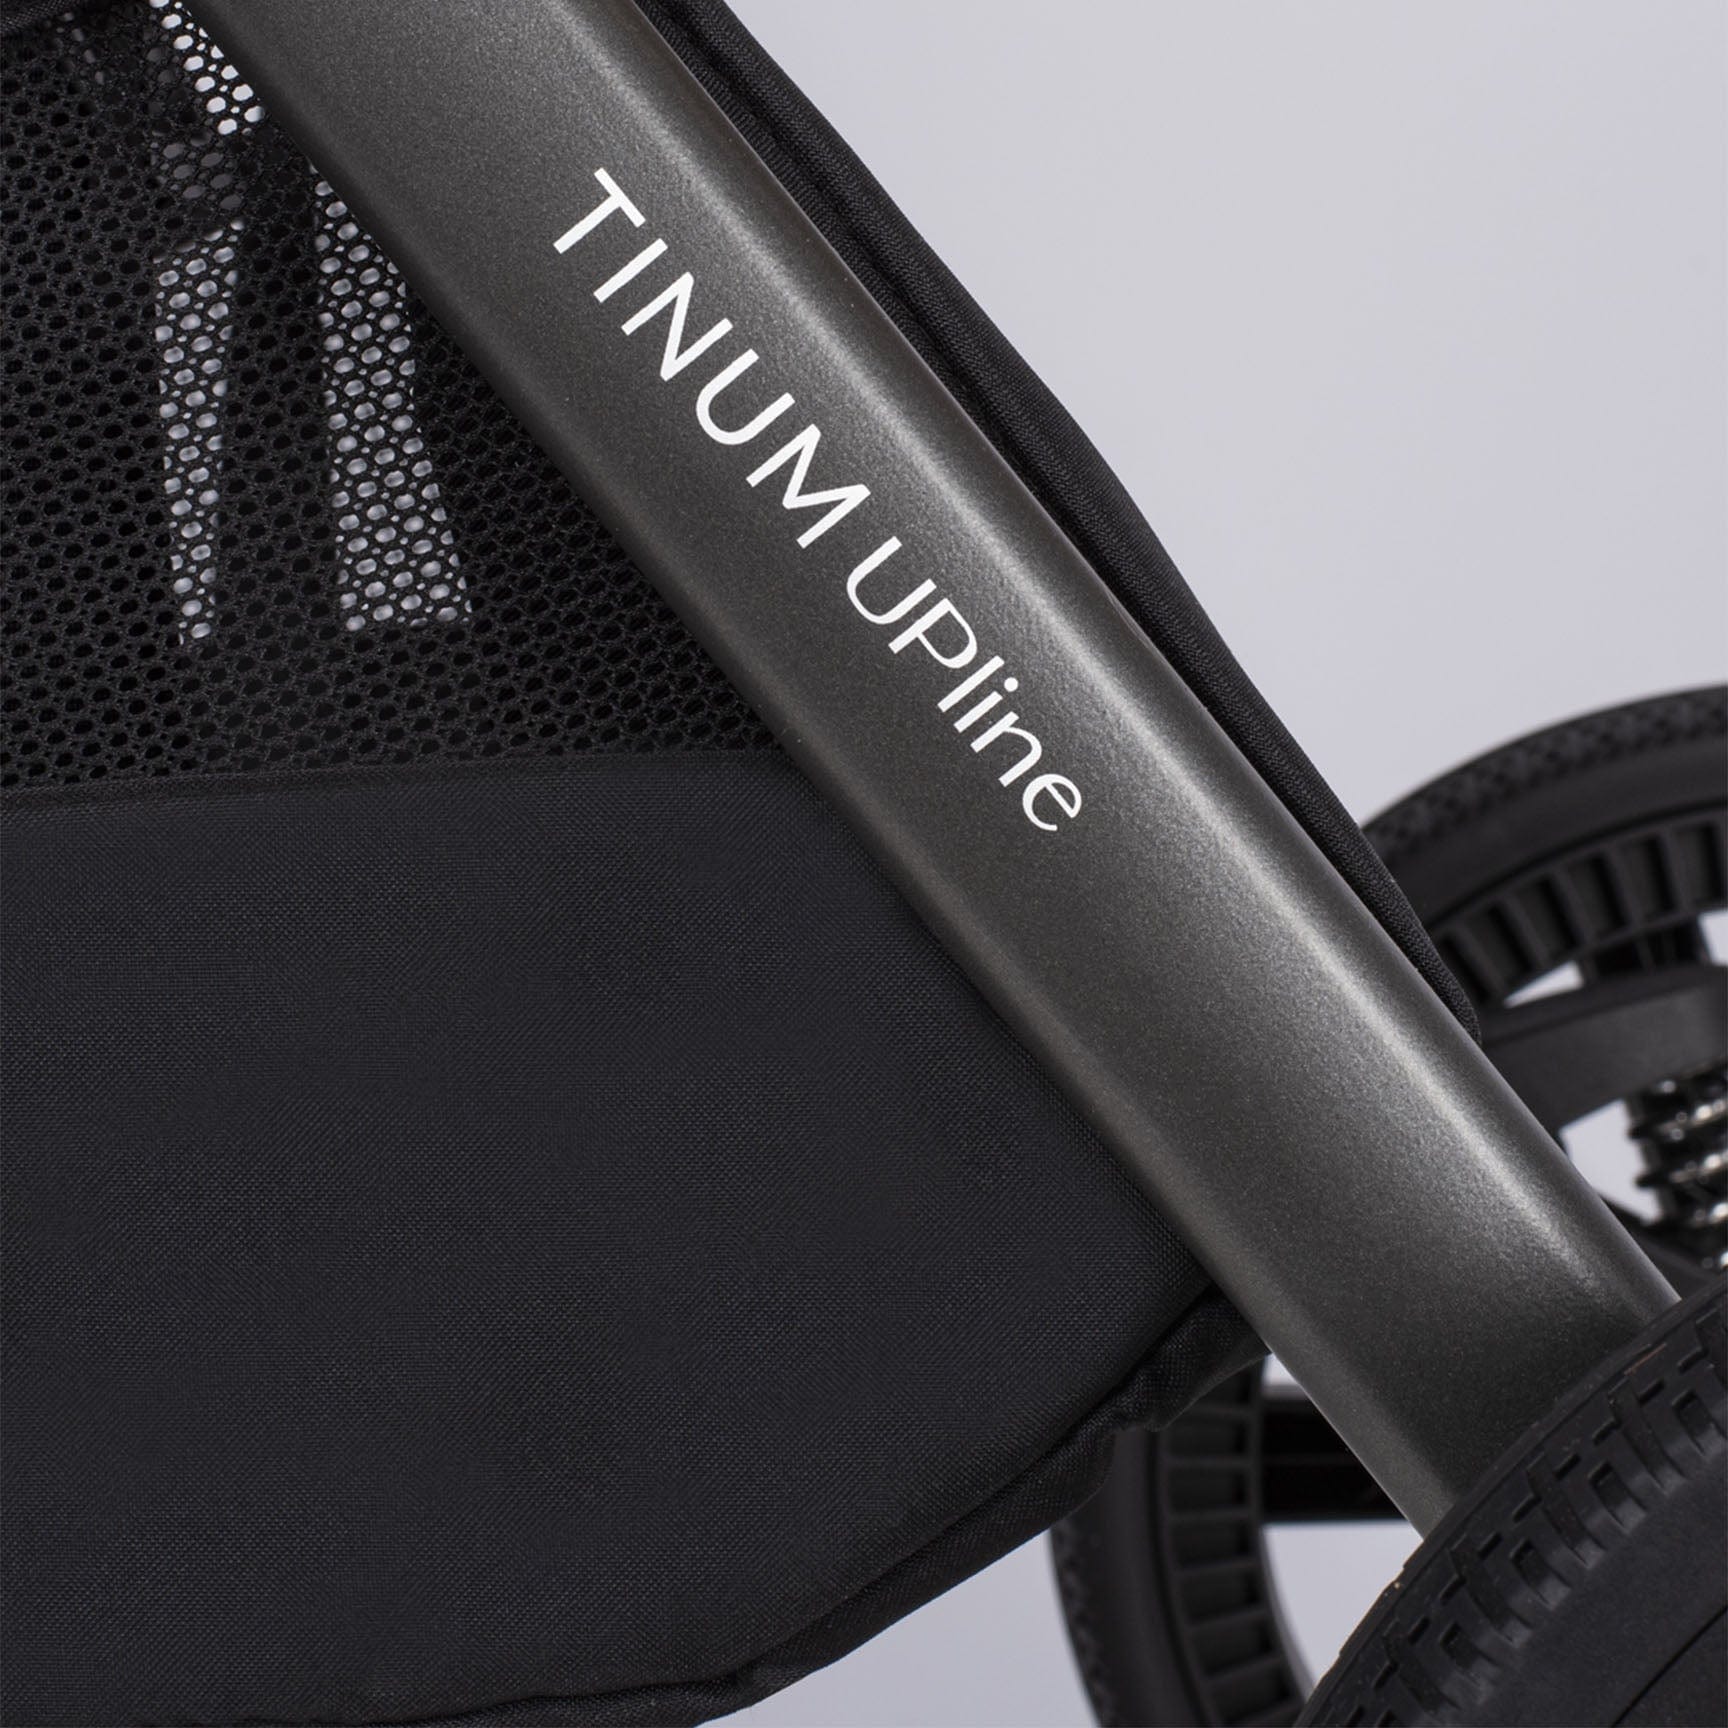 Venicci Tinum Upline Ultralite 3in1 Bundle in Misty Rose Pushchairs & Buggies